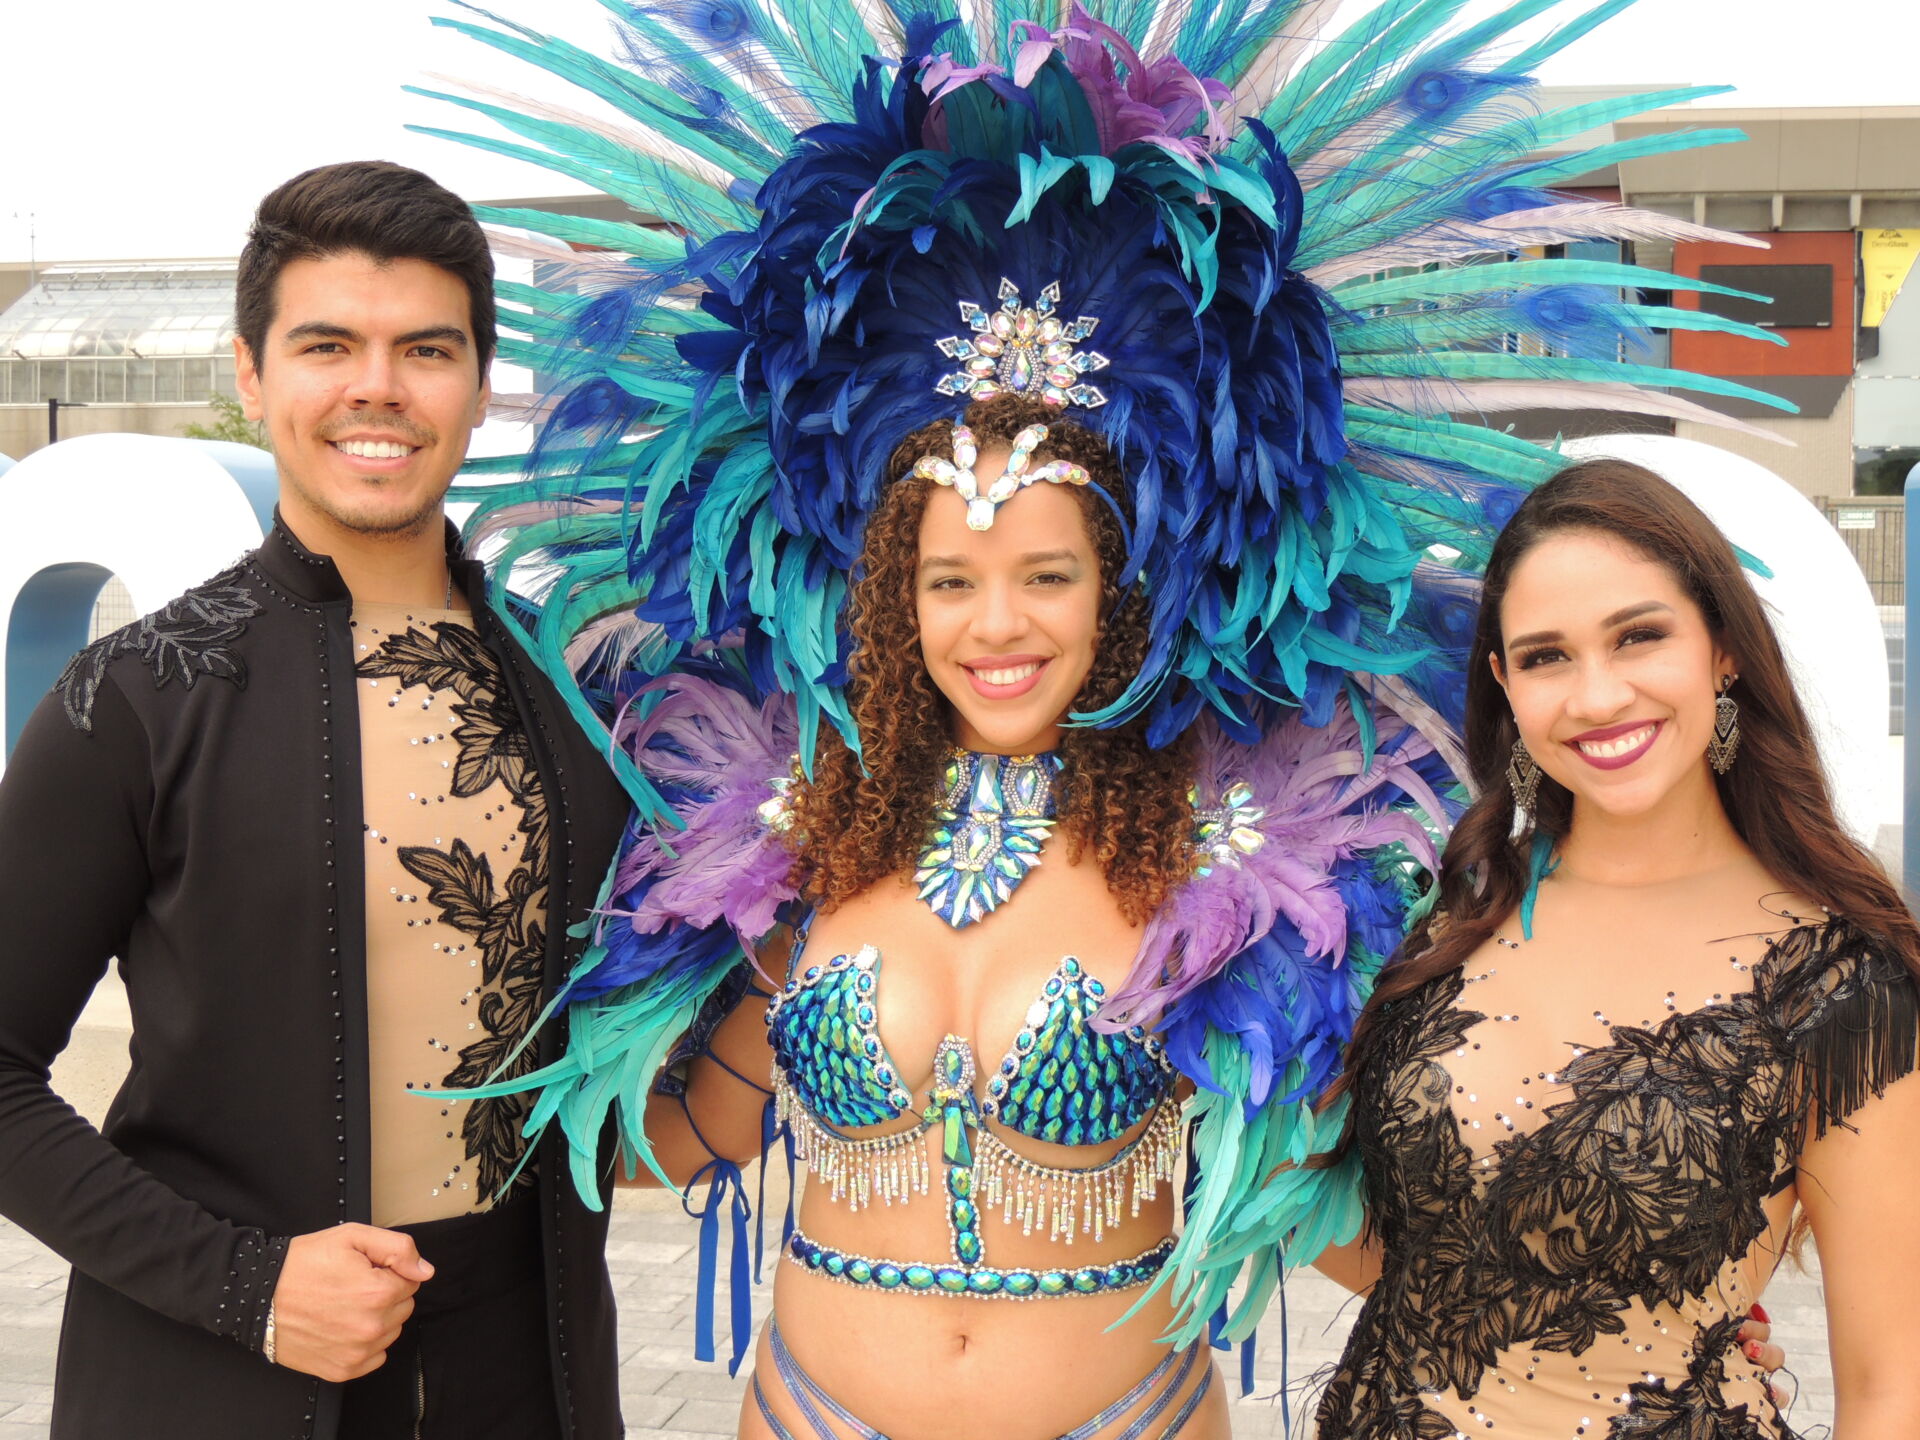 CaribeFest performers in costume: Jorge, Pierina, America